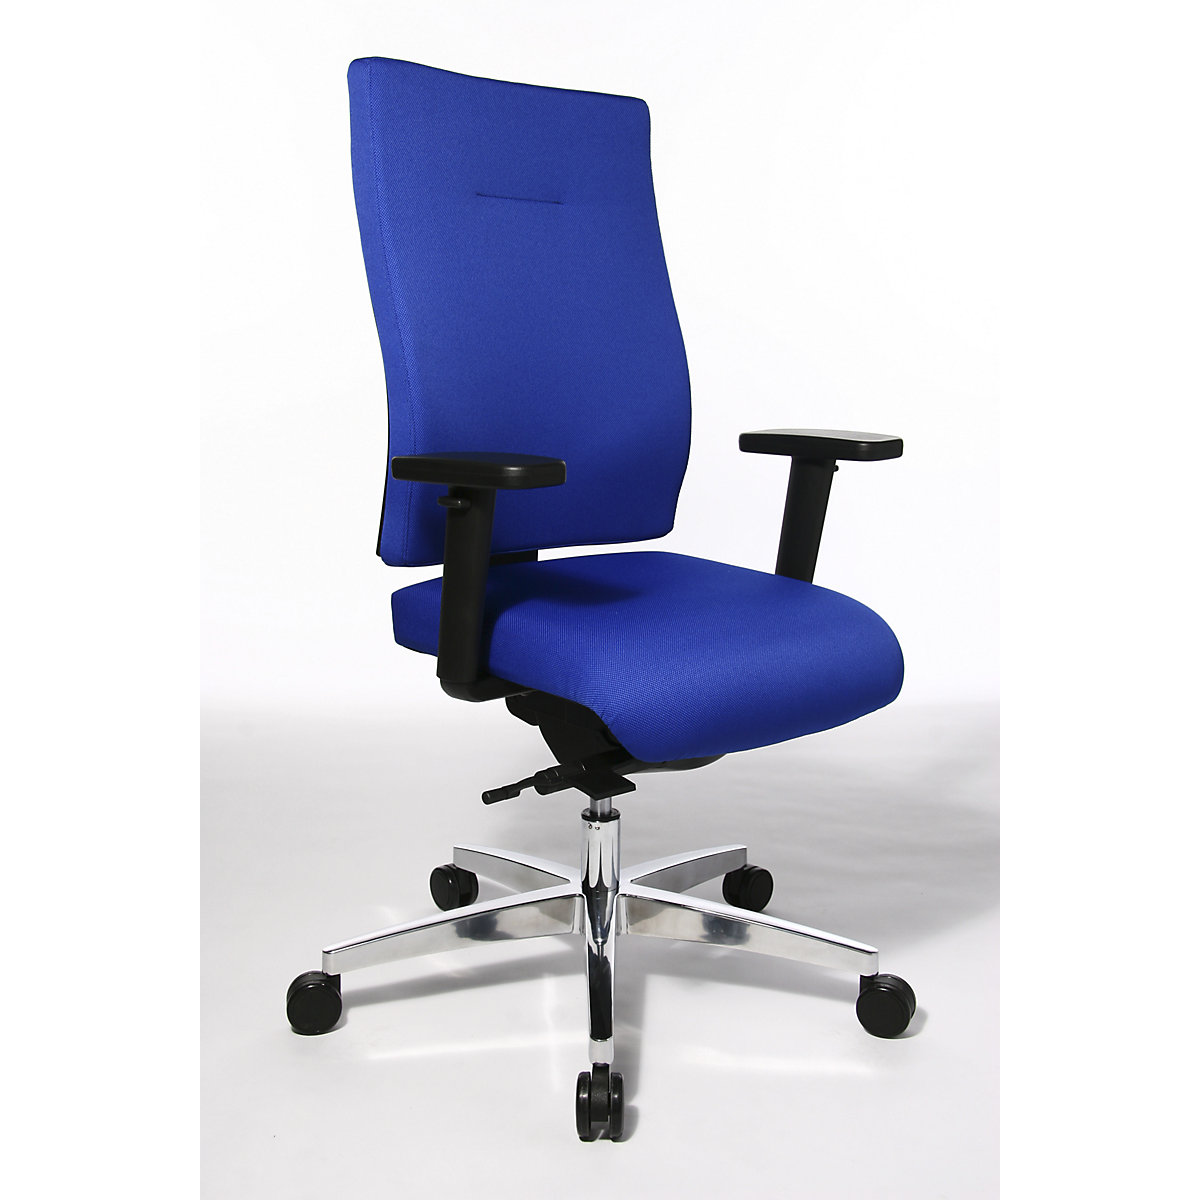 PROFI STAR 15 office swivel chair – Topstar, ergonomic back rest, blue-7